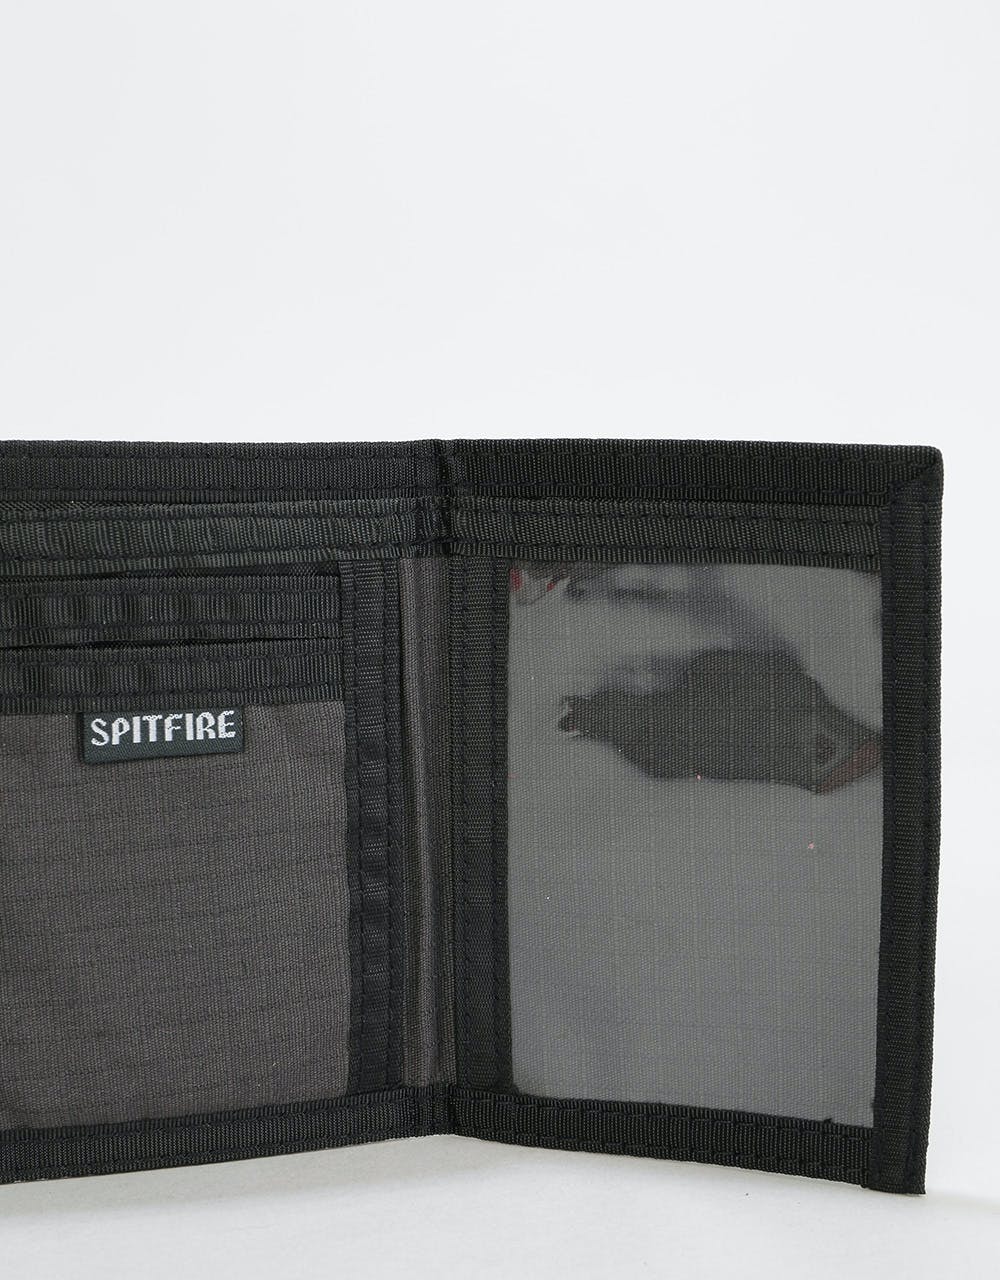 Spitfire Bighead Emblem Wallet - Grey/Black